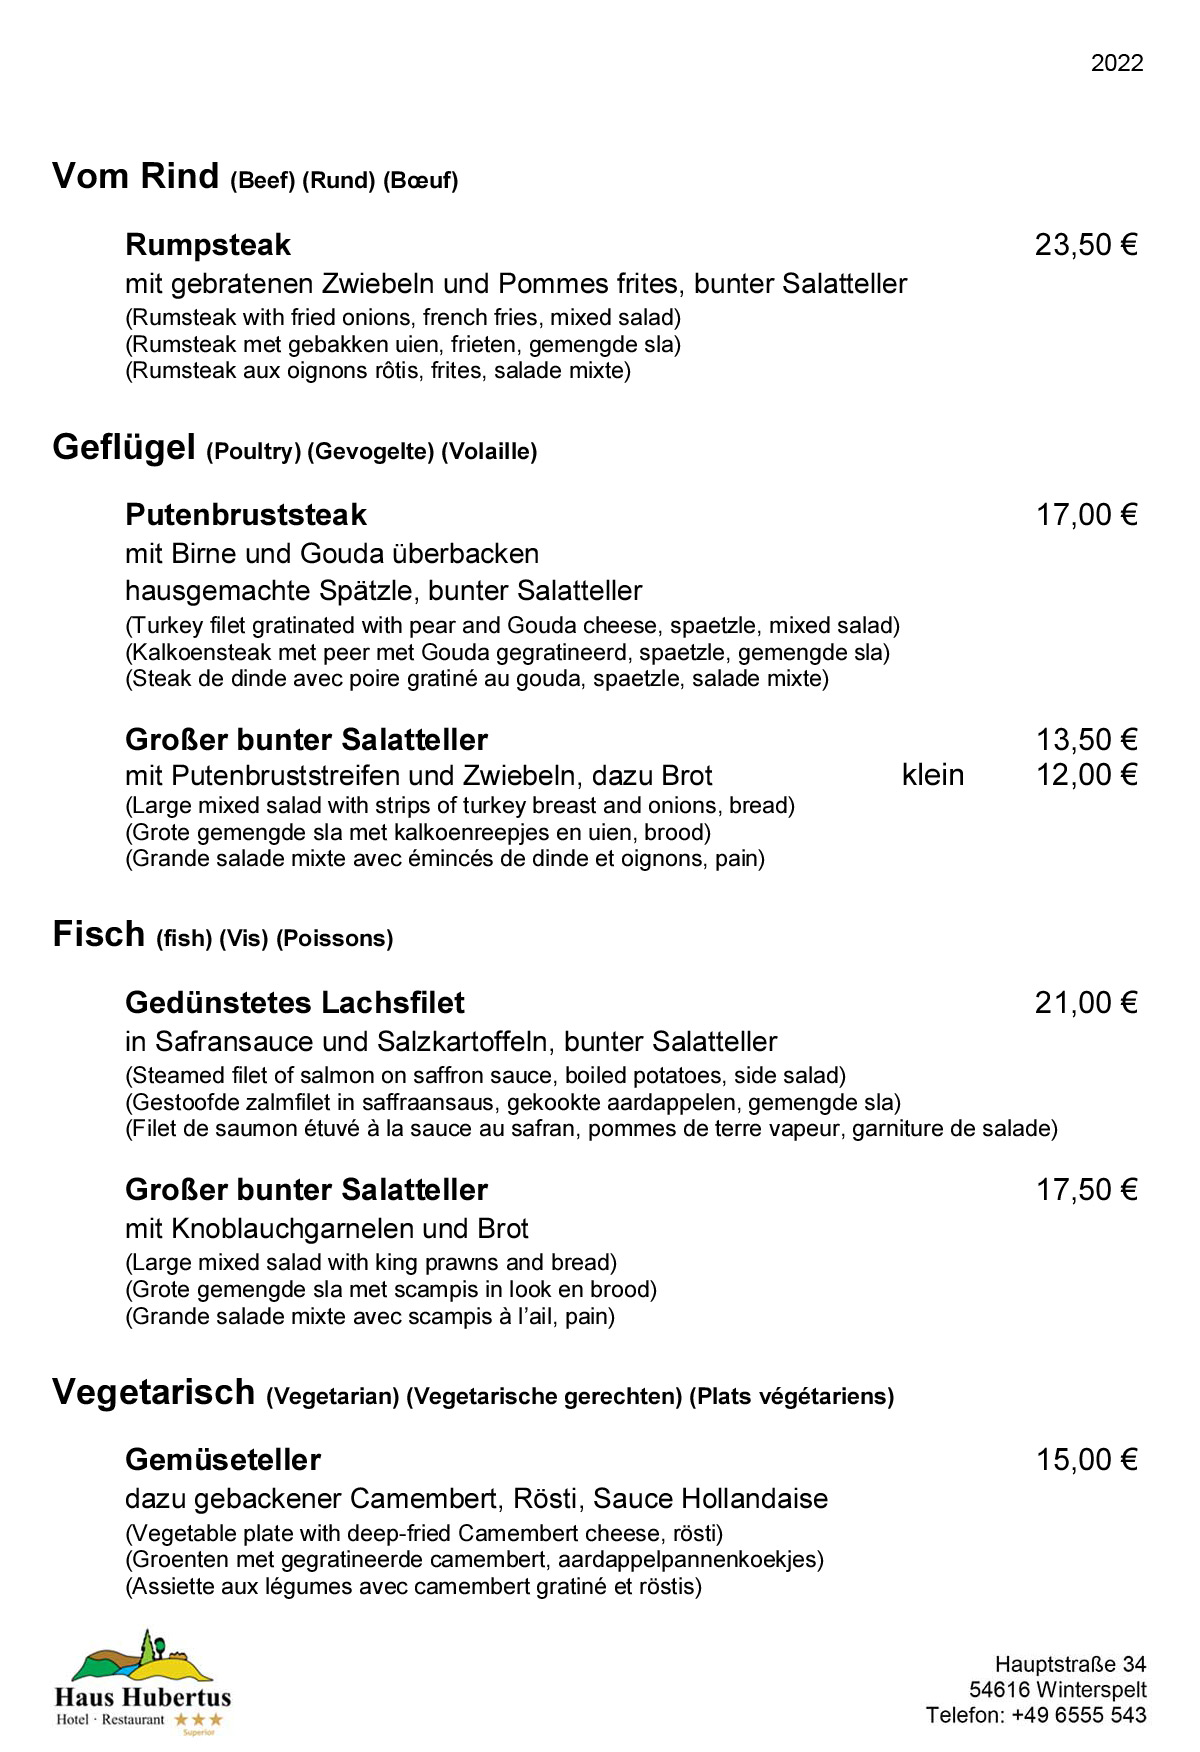 Hotel - Restaurant Haus Hubertus - menu 07/2022 - our classics - page 2